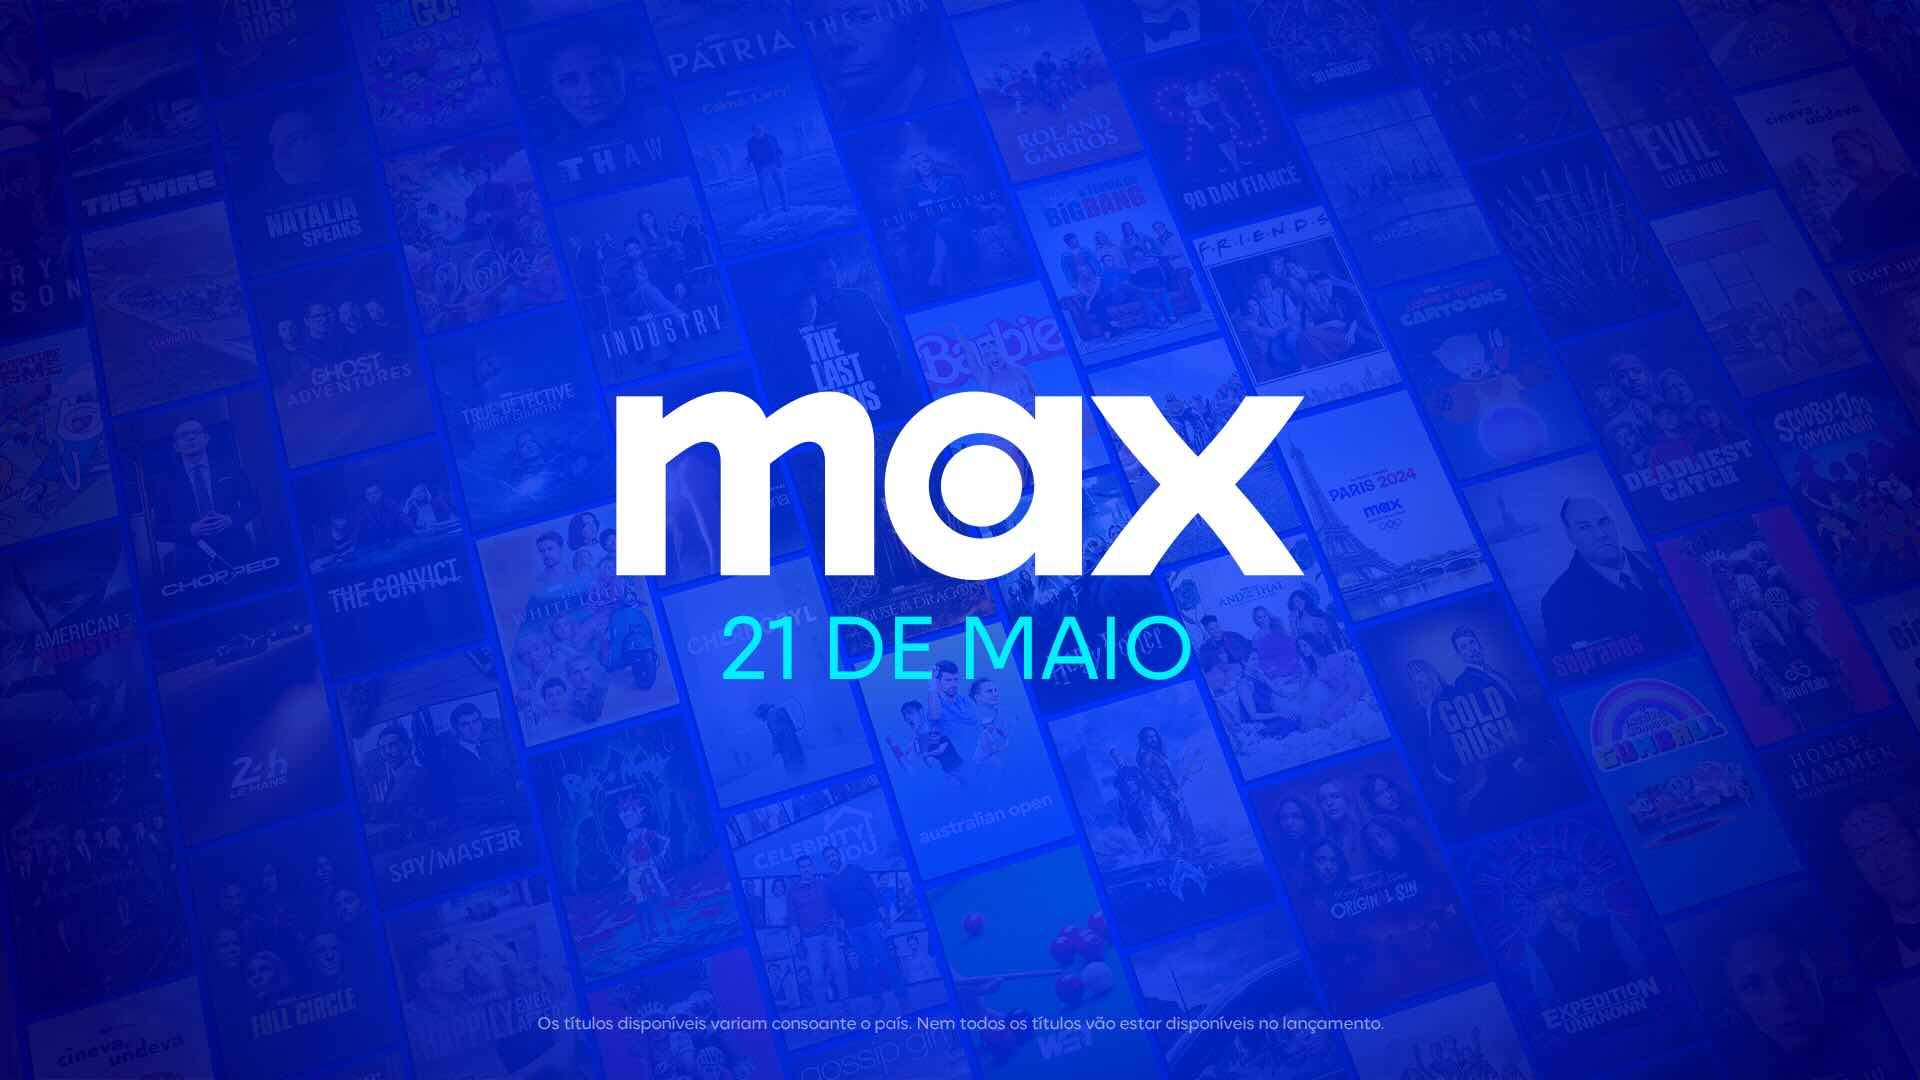 Max streaming em Portugal